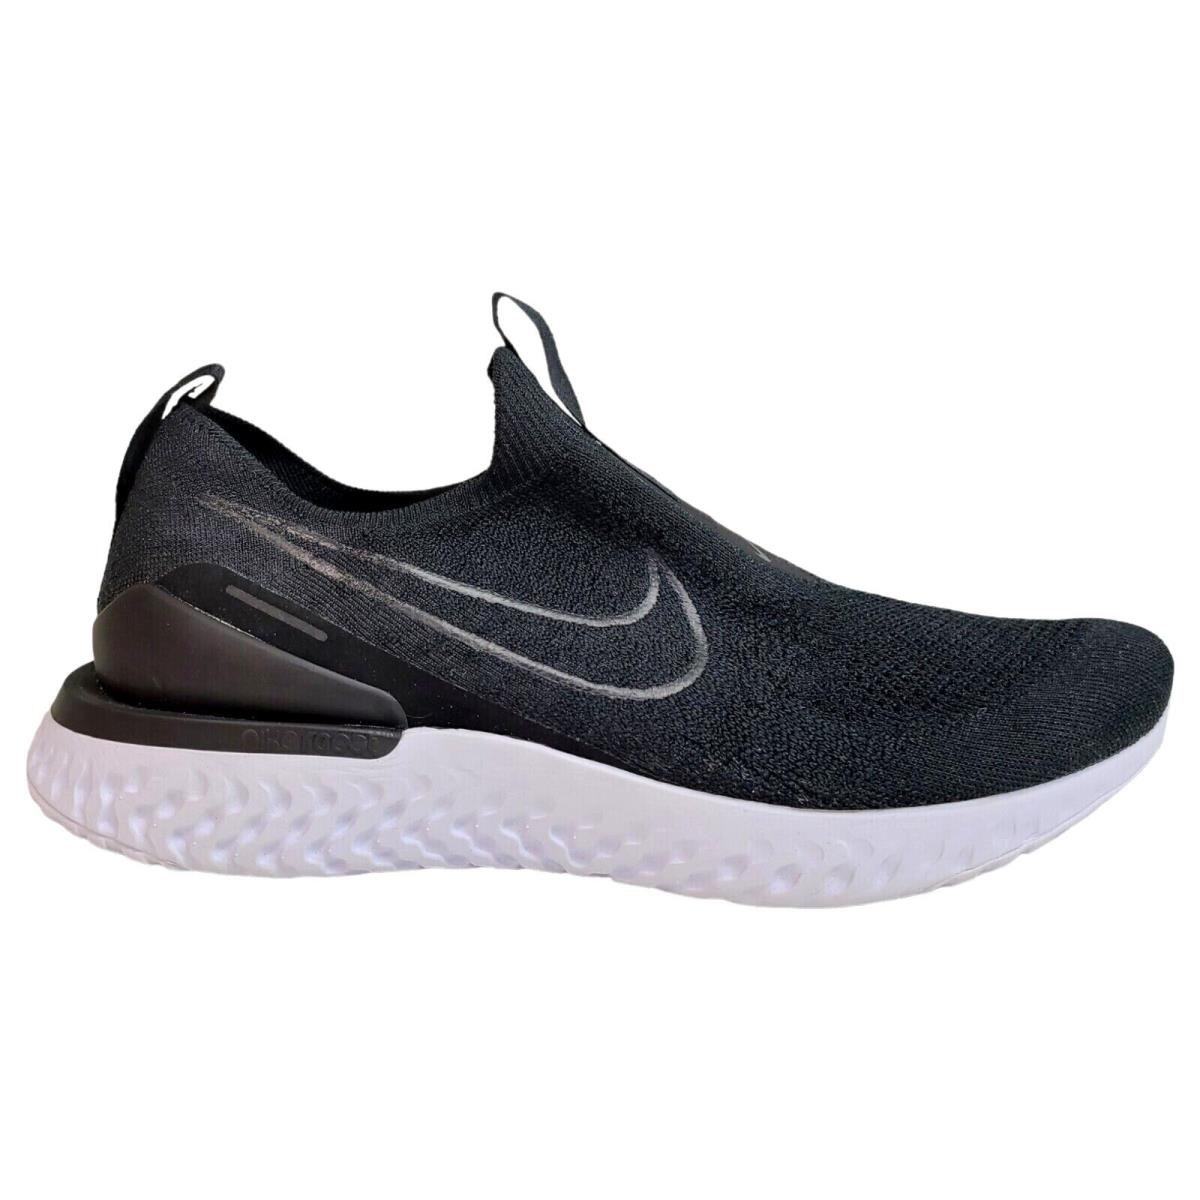 Nike Mens 10 11 Epic Phantom React Flyknit Running Shoes Black BV0417-001 - Black